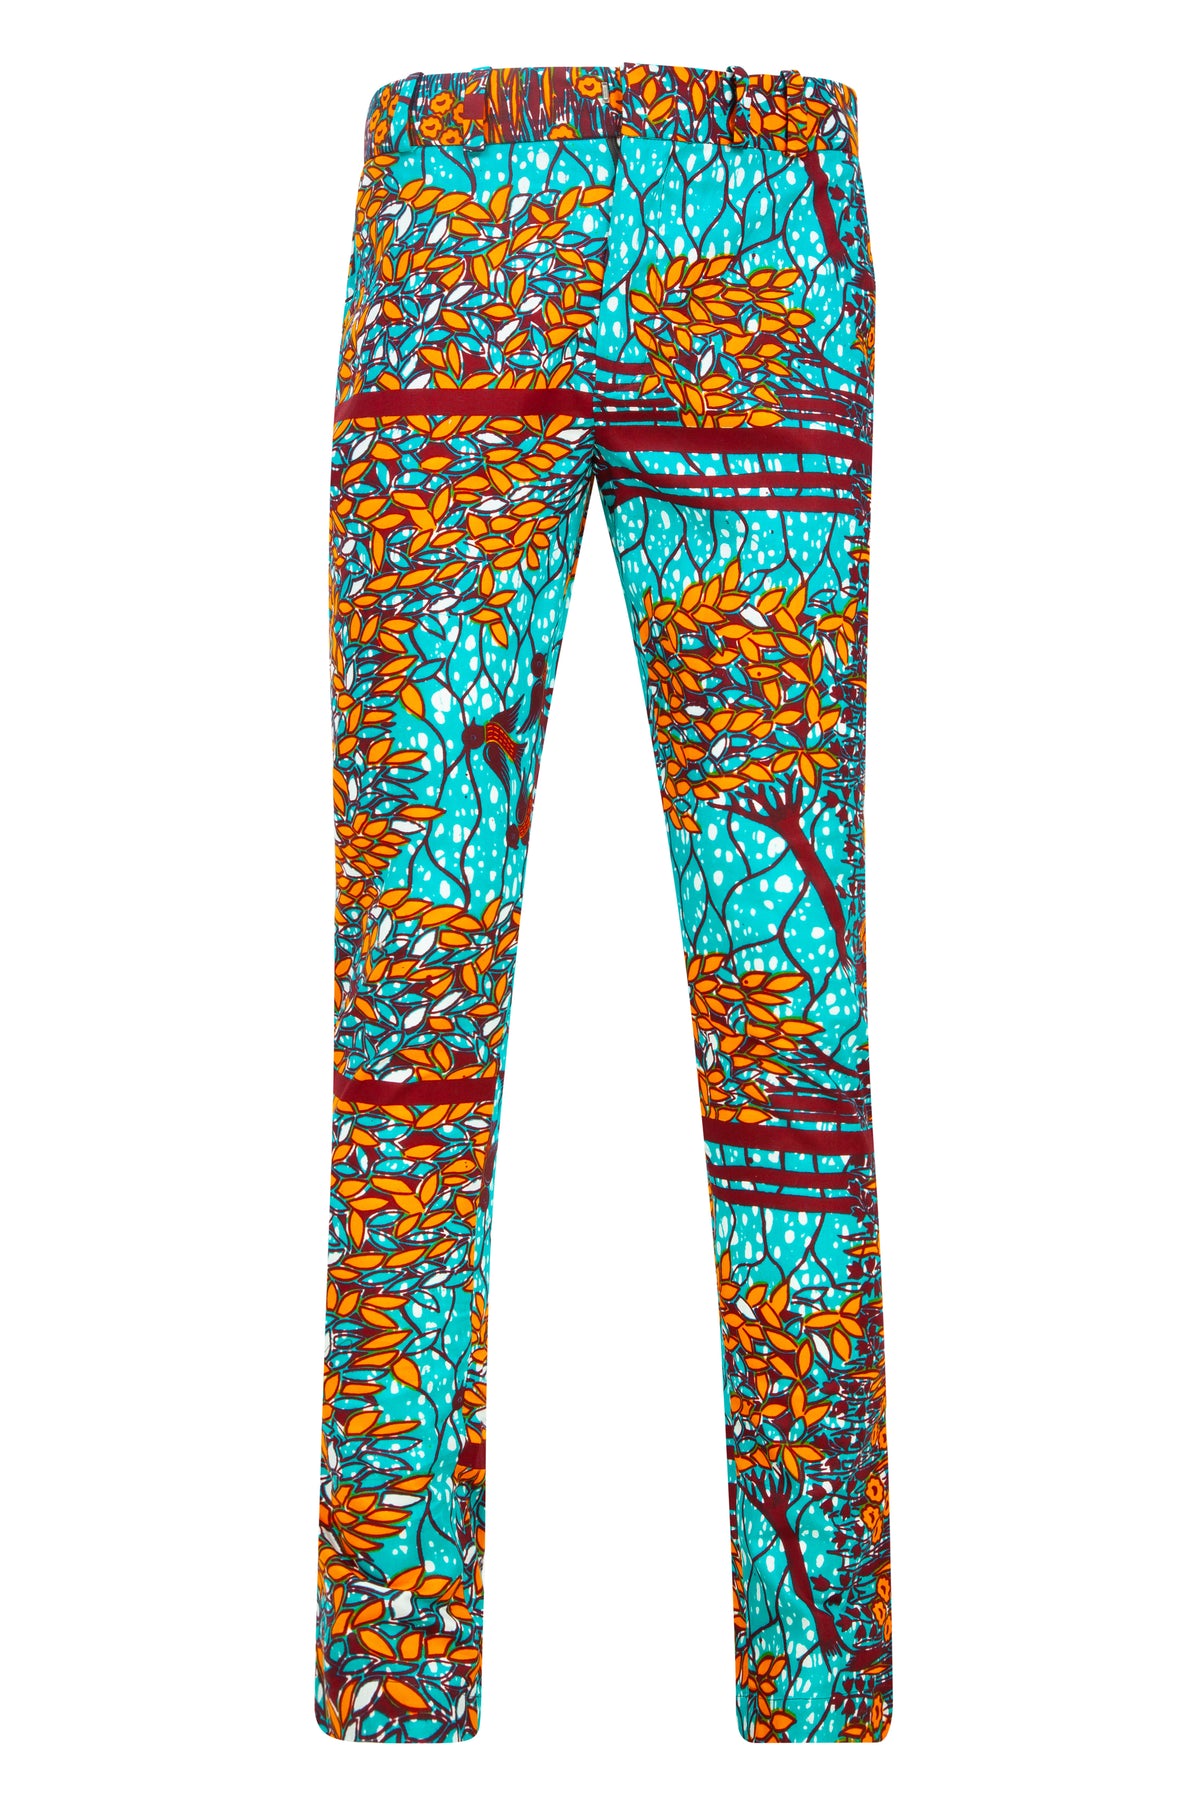 Osei African print Slim leg Trouser- Ewuarsi - OHEMA OHENE AFRICAN INSPIRED FASHION